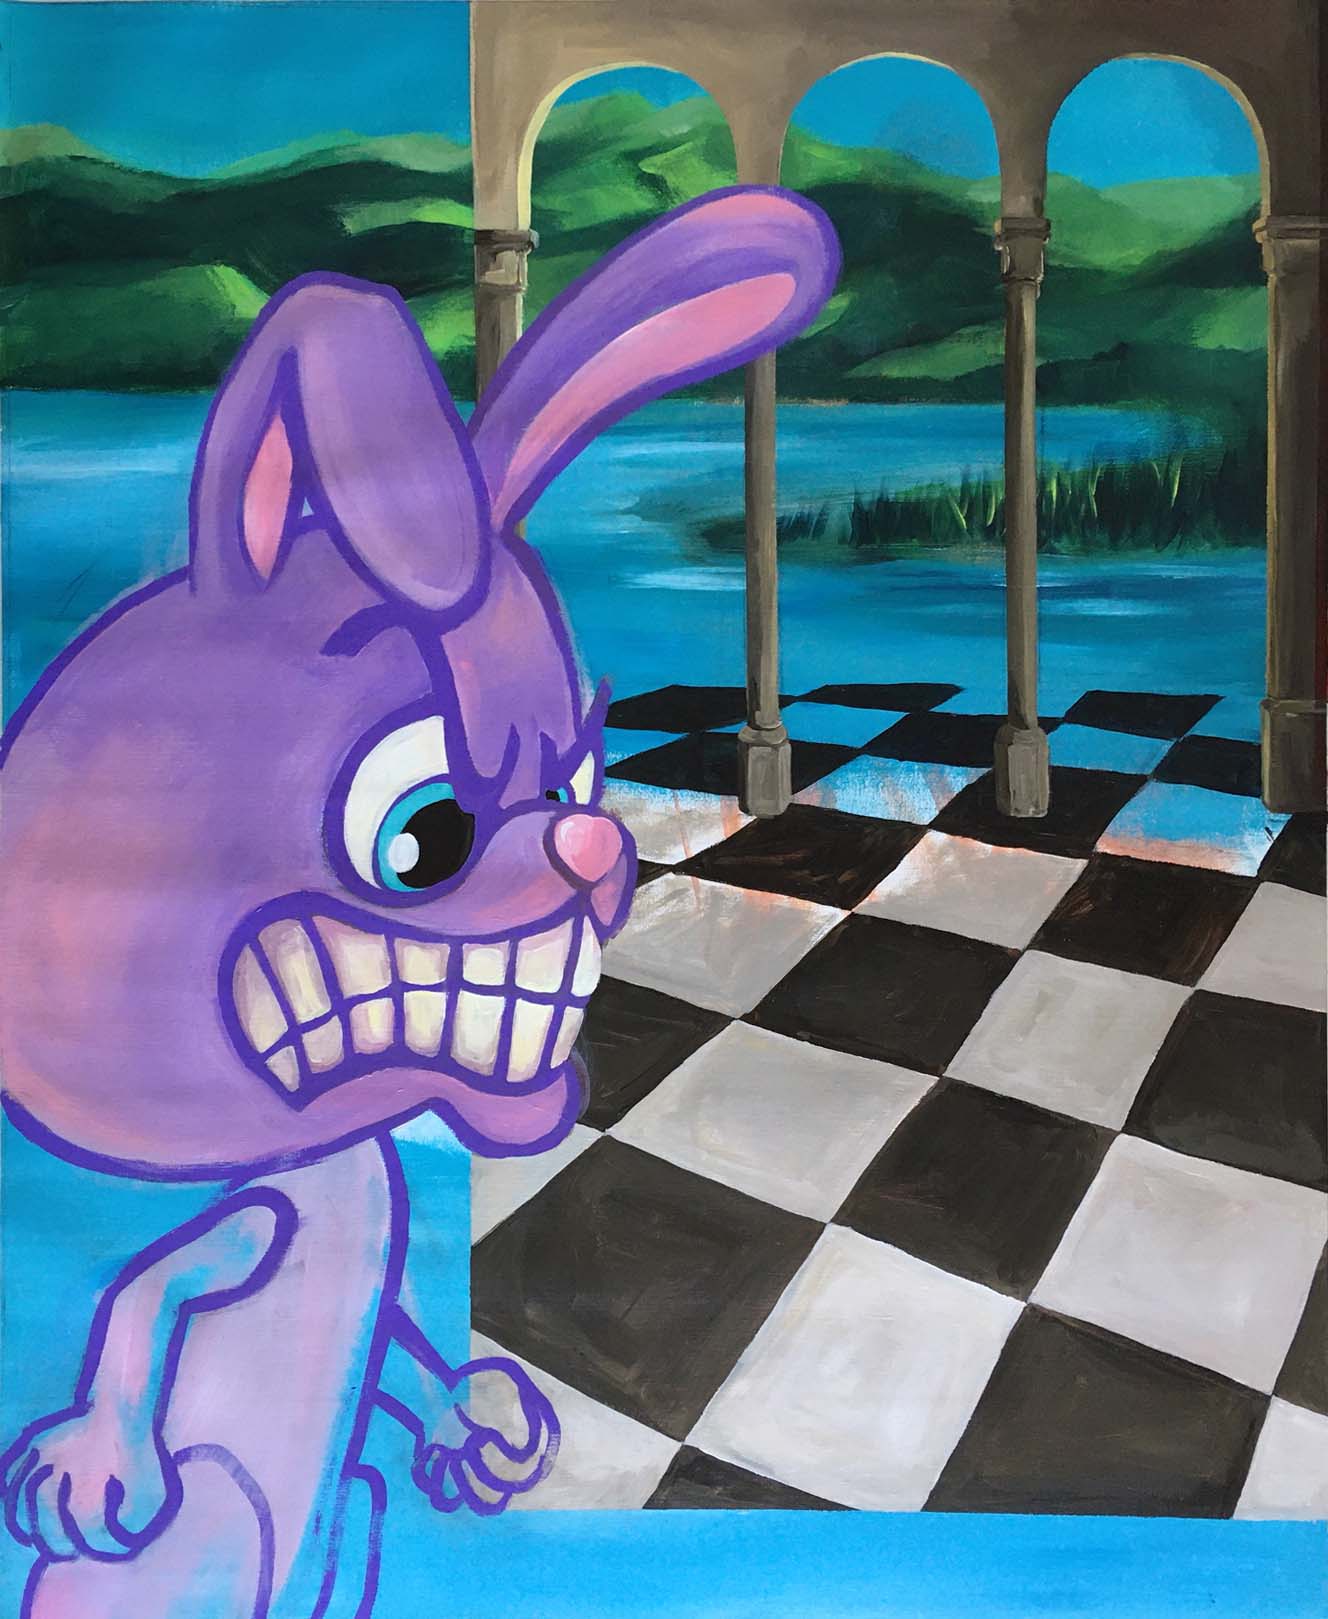 Tony the rabbit hates playing chess, acrylic on canvas